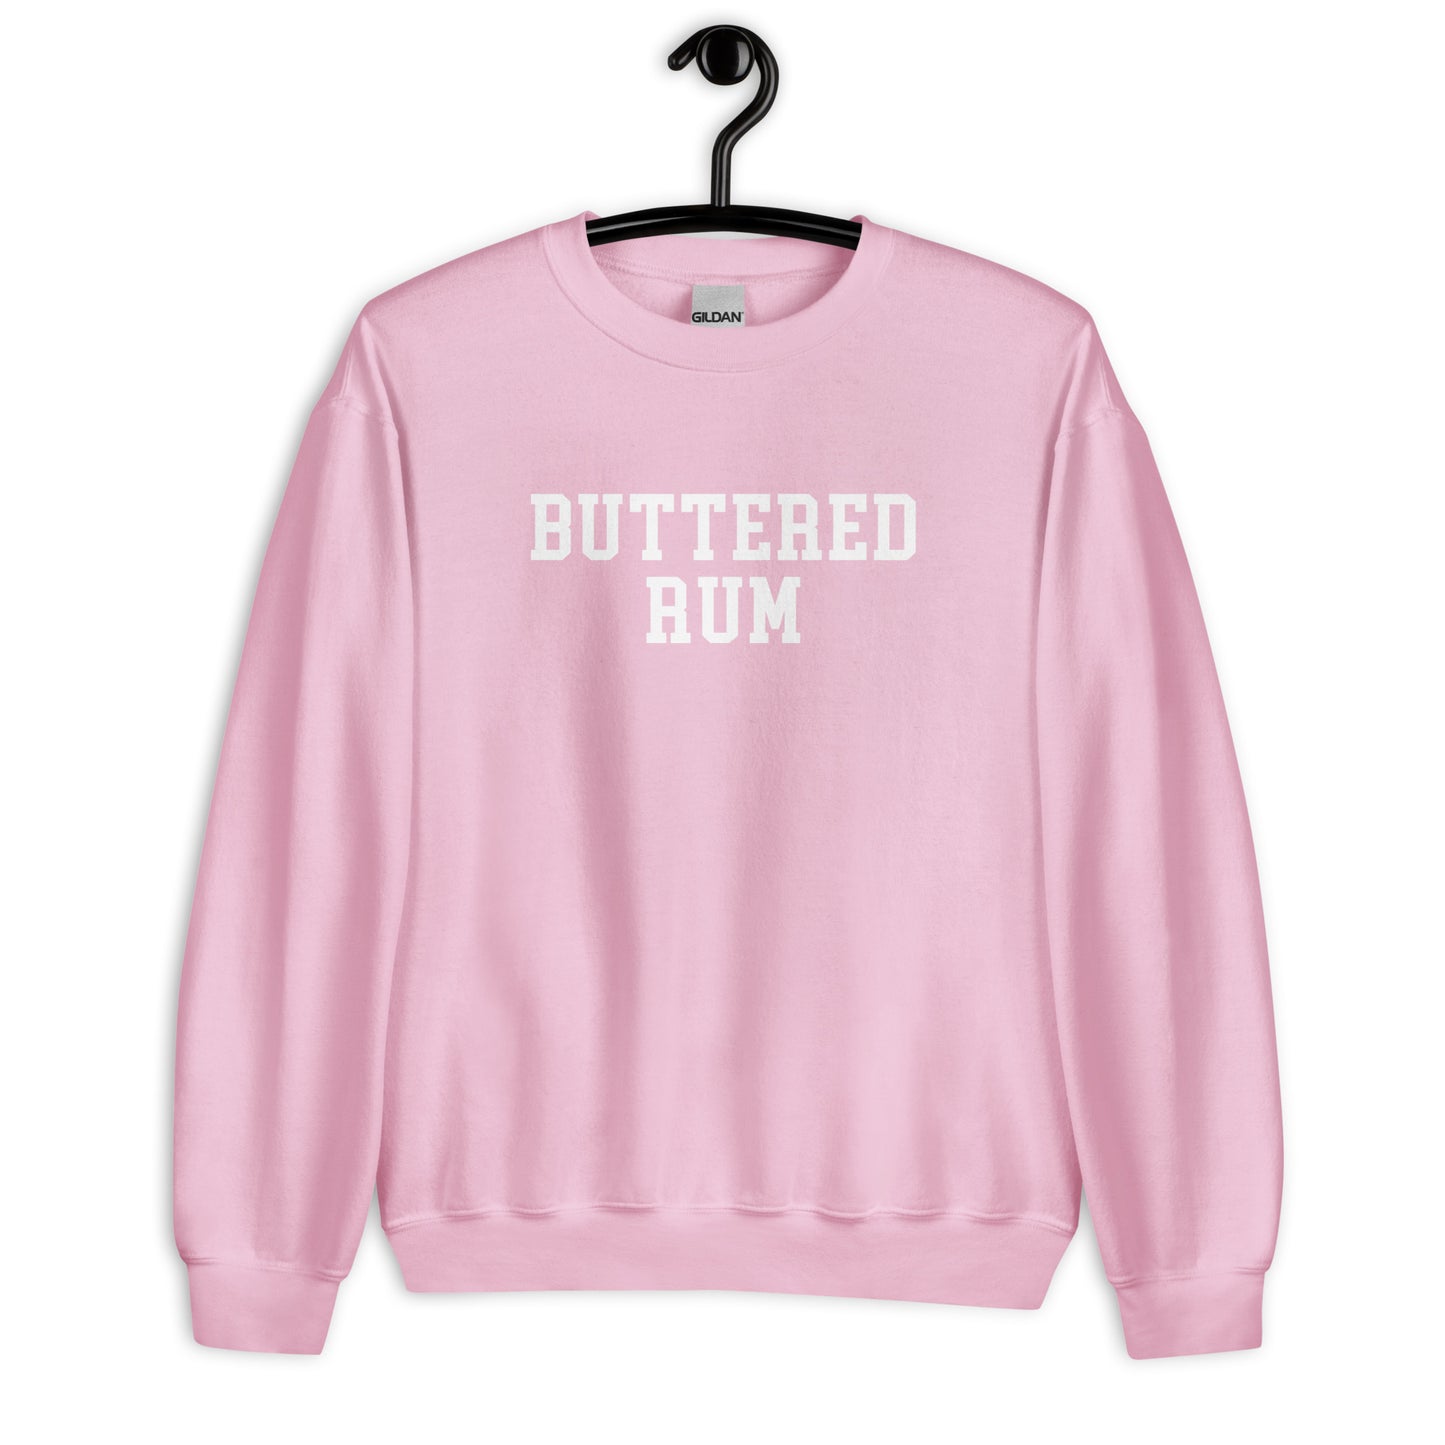 Buttered Rum Sweatshirt - Straight Font